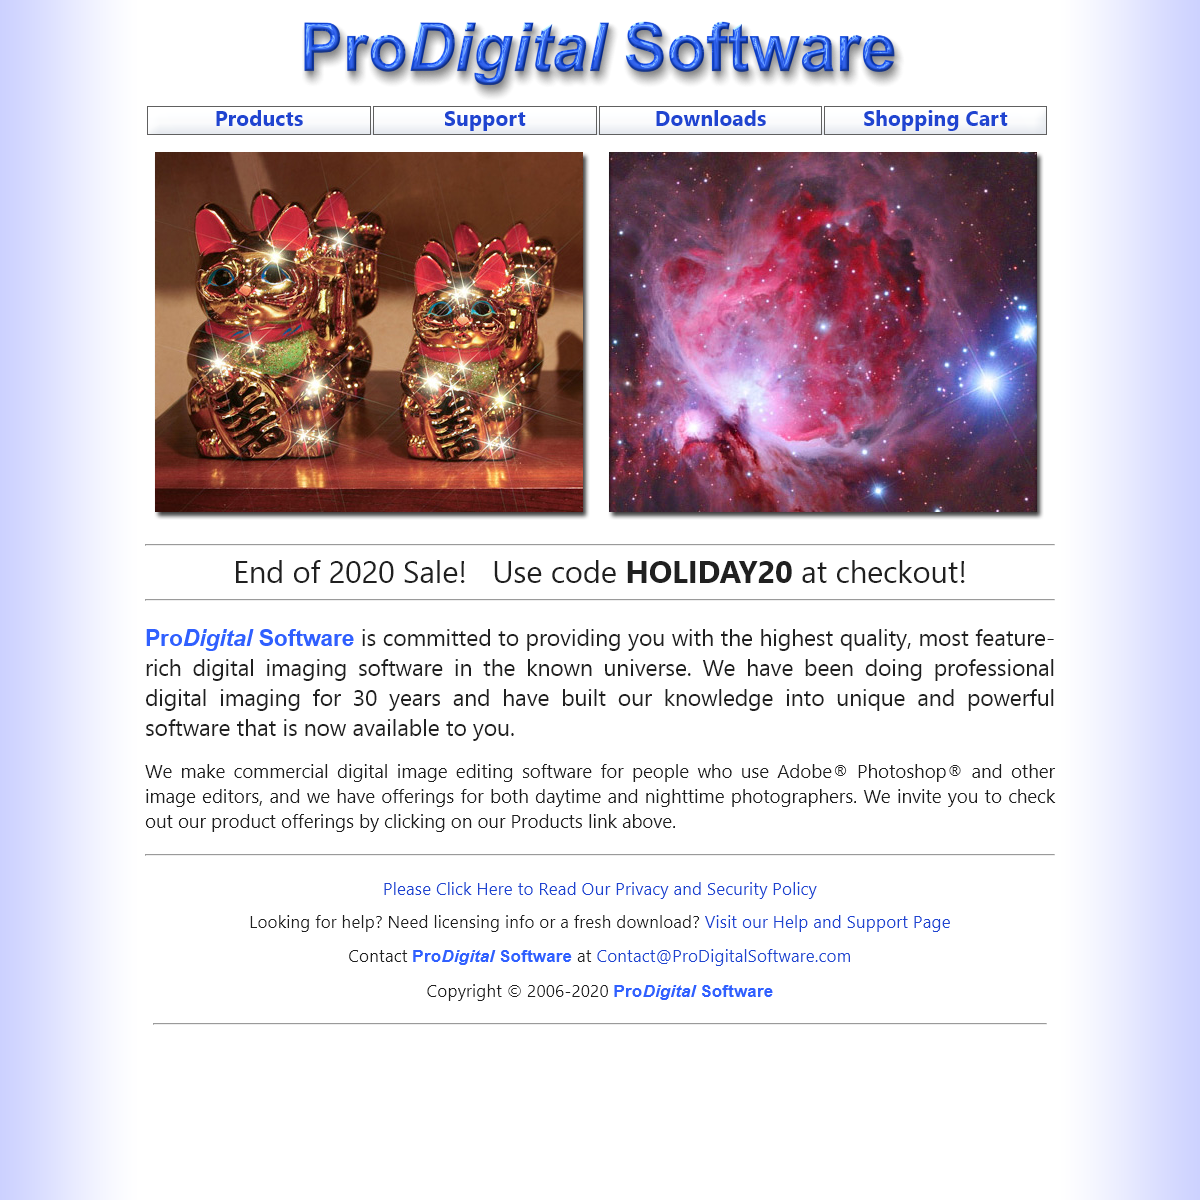 A complete backup of prodigitalsoftware.com